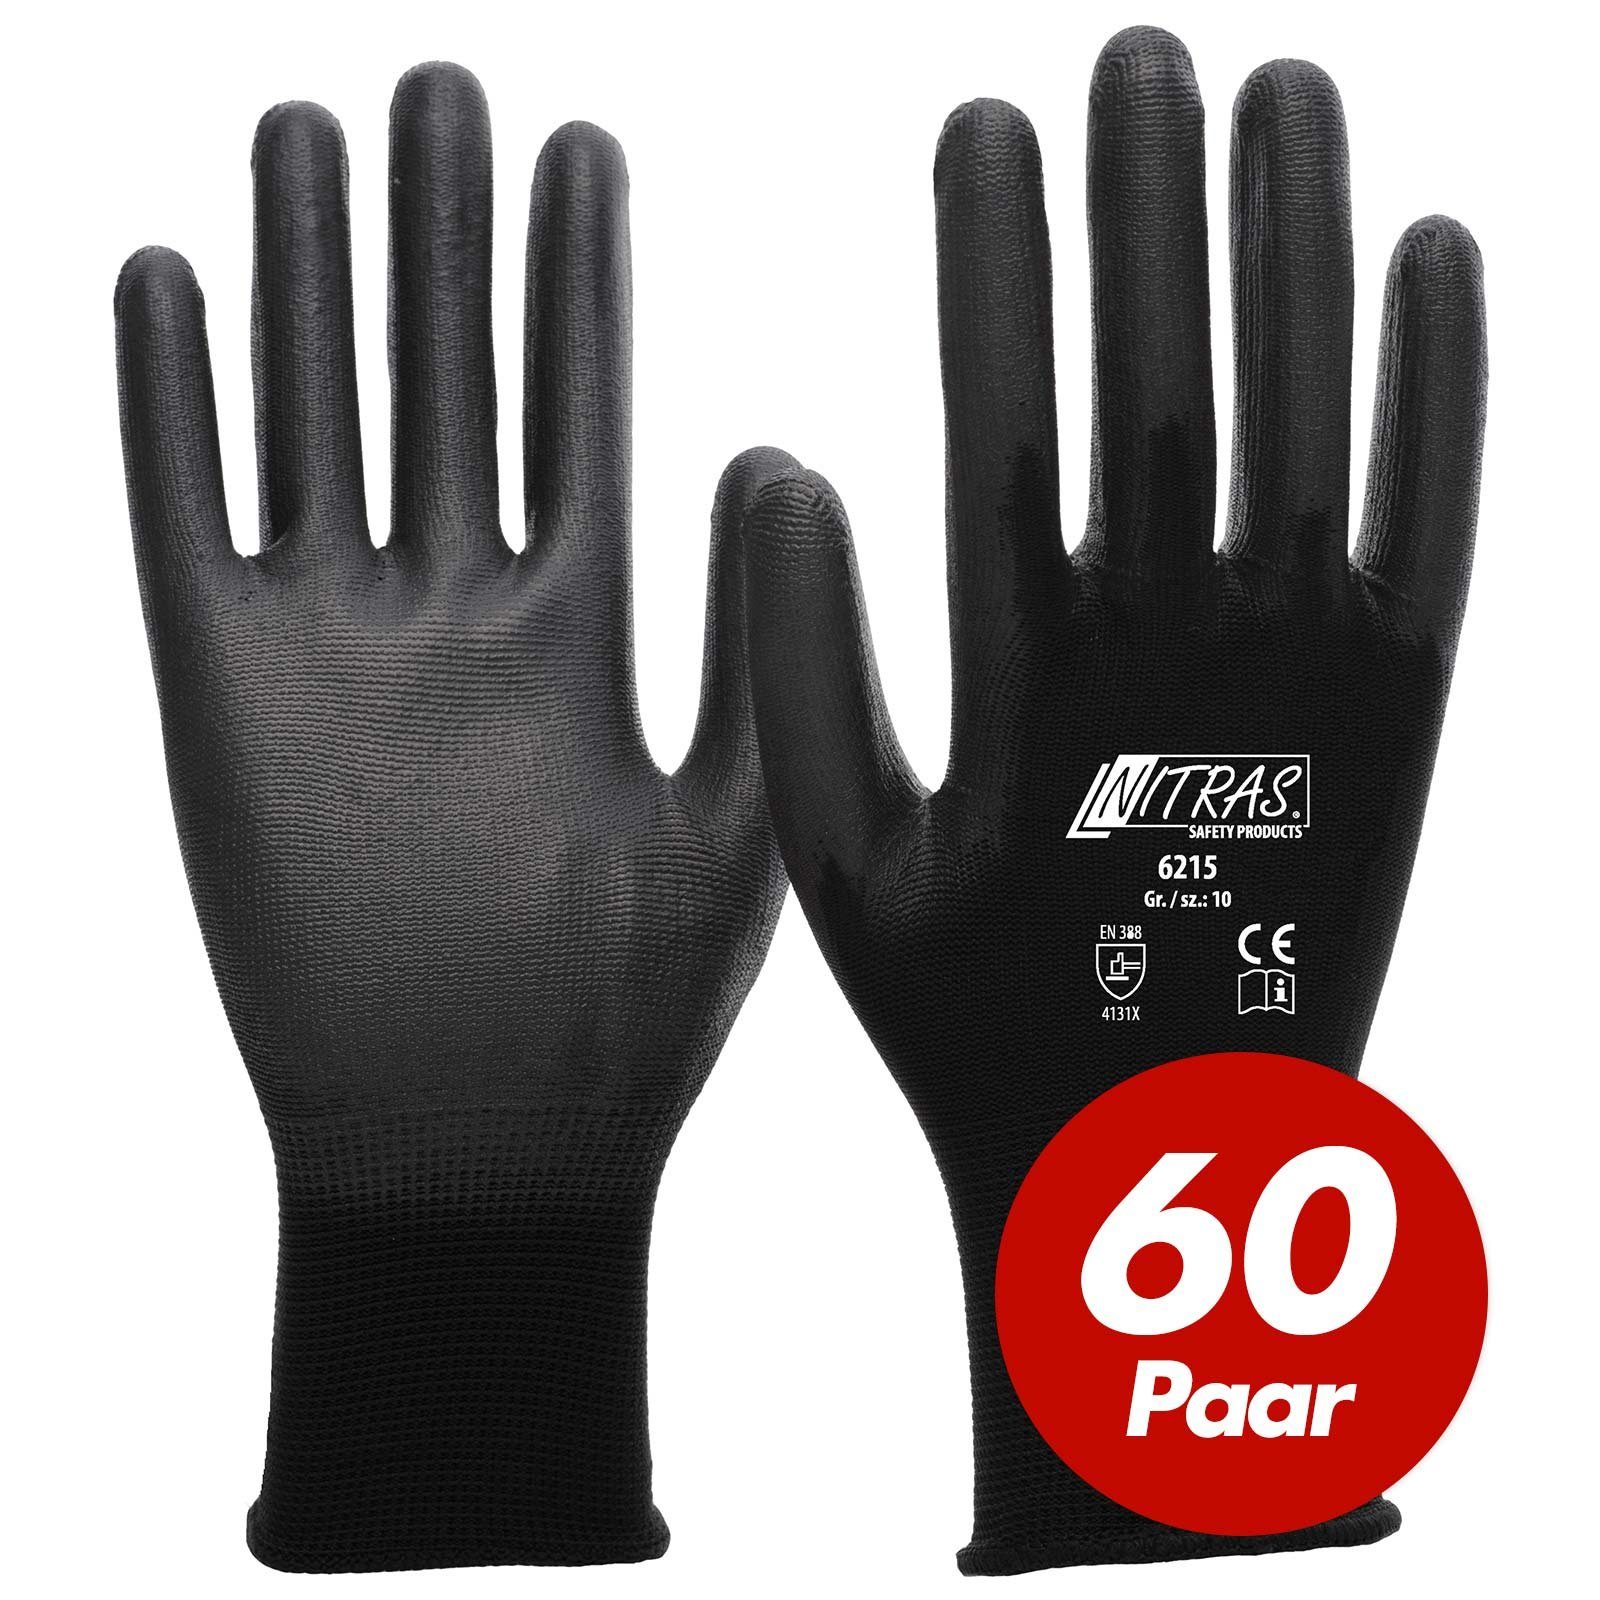 Nitras Nitril-Handschuhe 6215 Nylon Strickhandschuh, Schutzhandschuhe - VPE 60 Paar (Spar-Set)